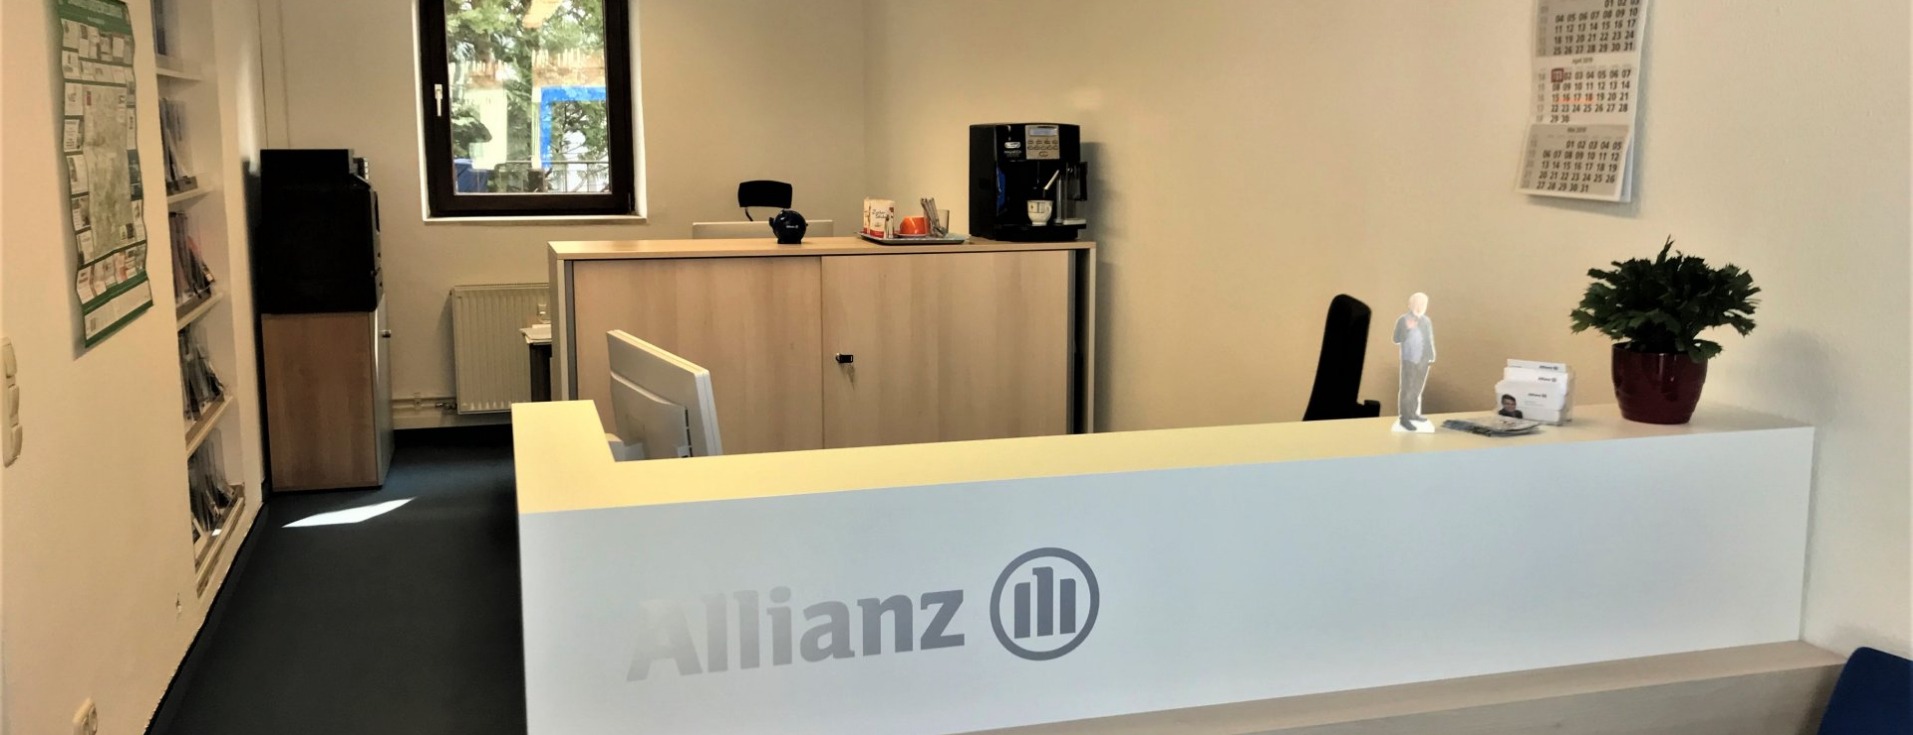 Allianz Versicherung Felix Schuler Maisach - Versicherung Maisach Beratung Vorsorge